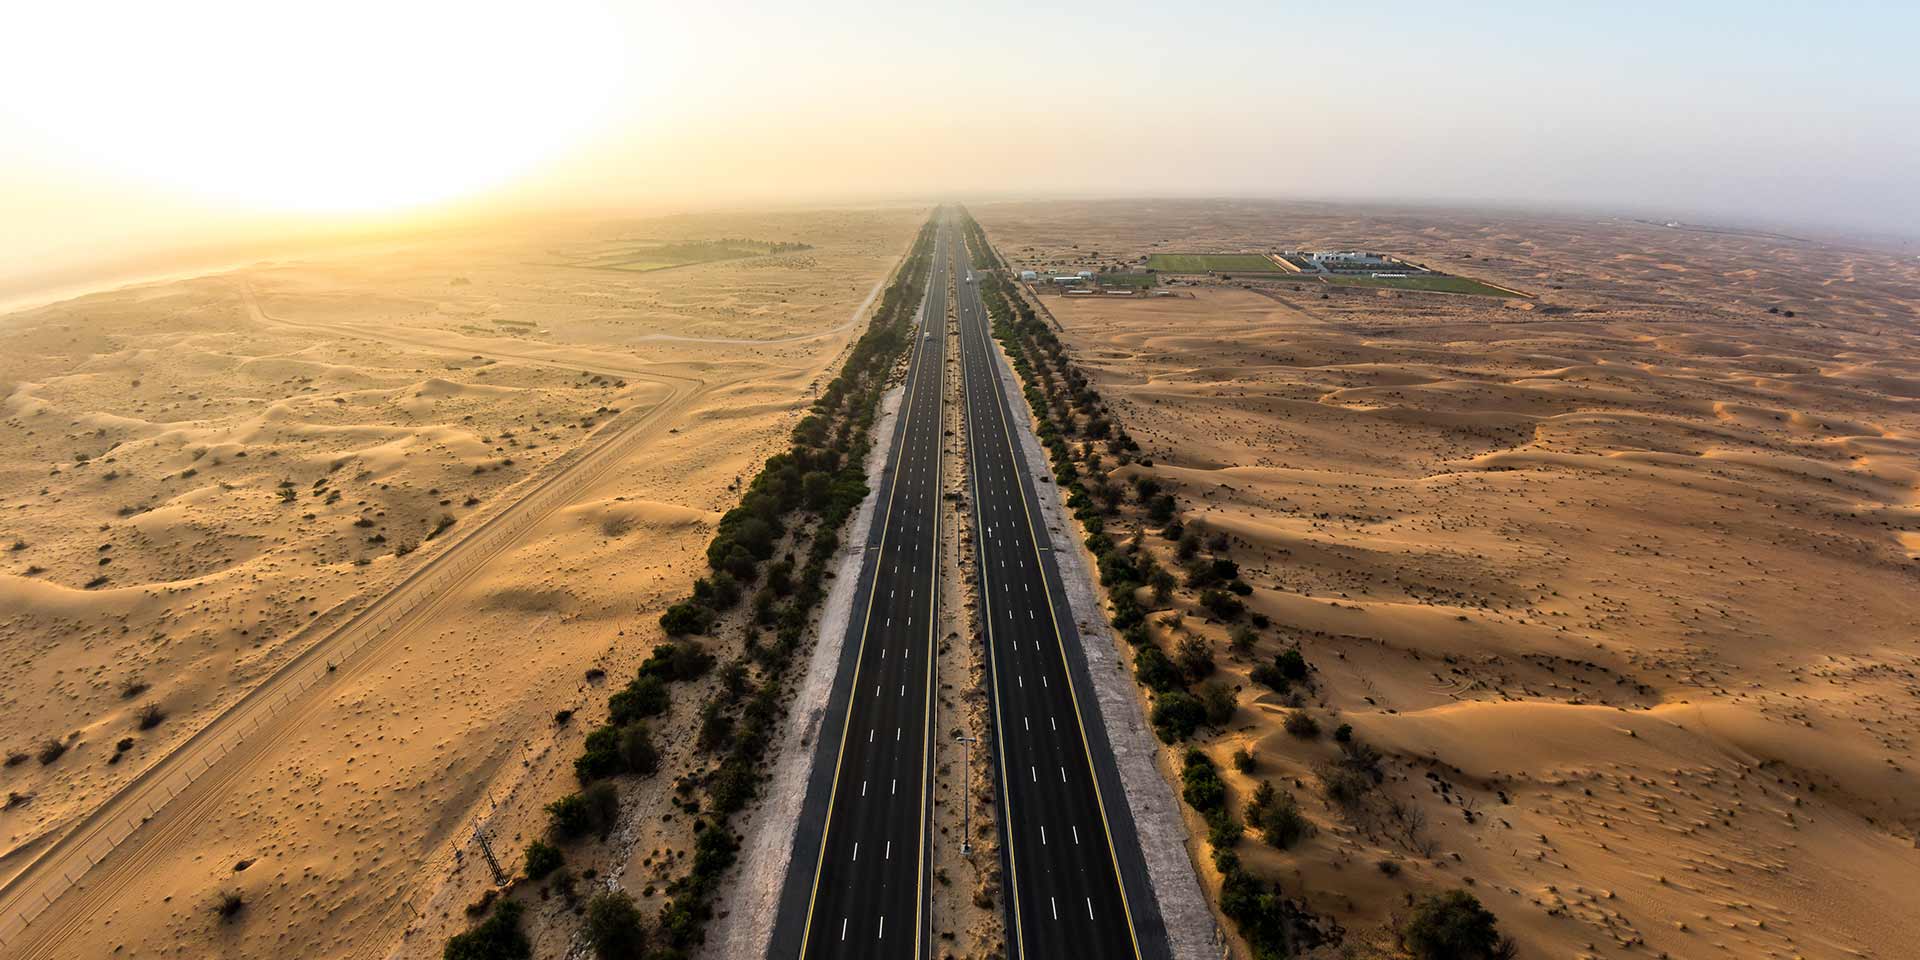 desert highway in dubai stretching past dunes at sunset